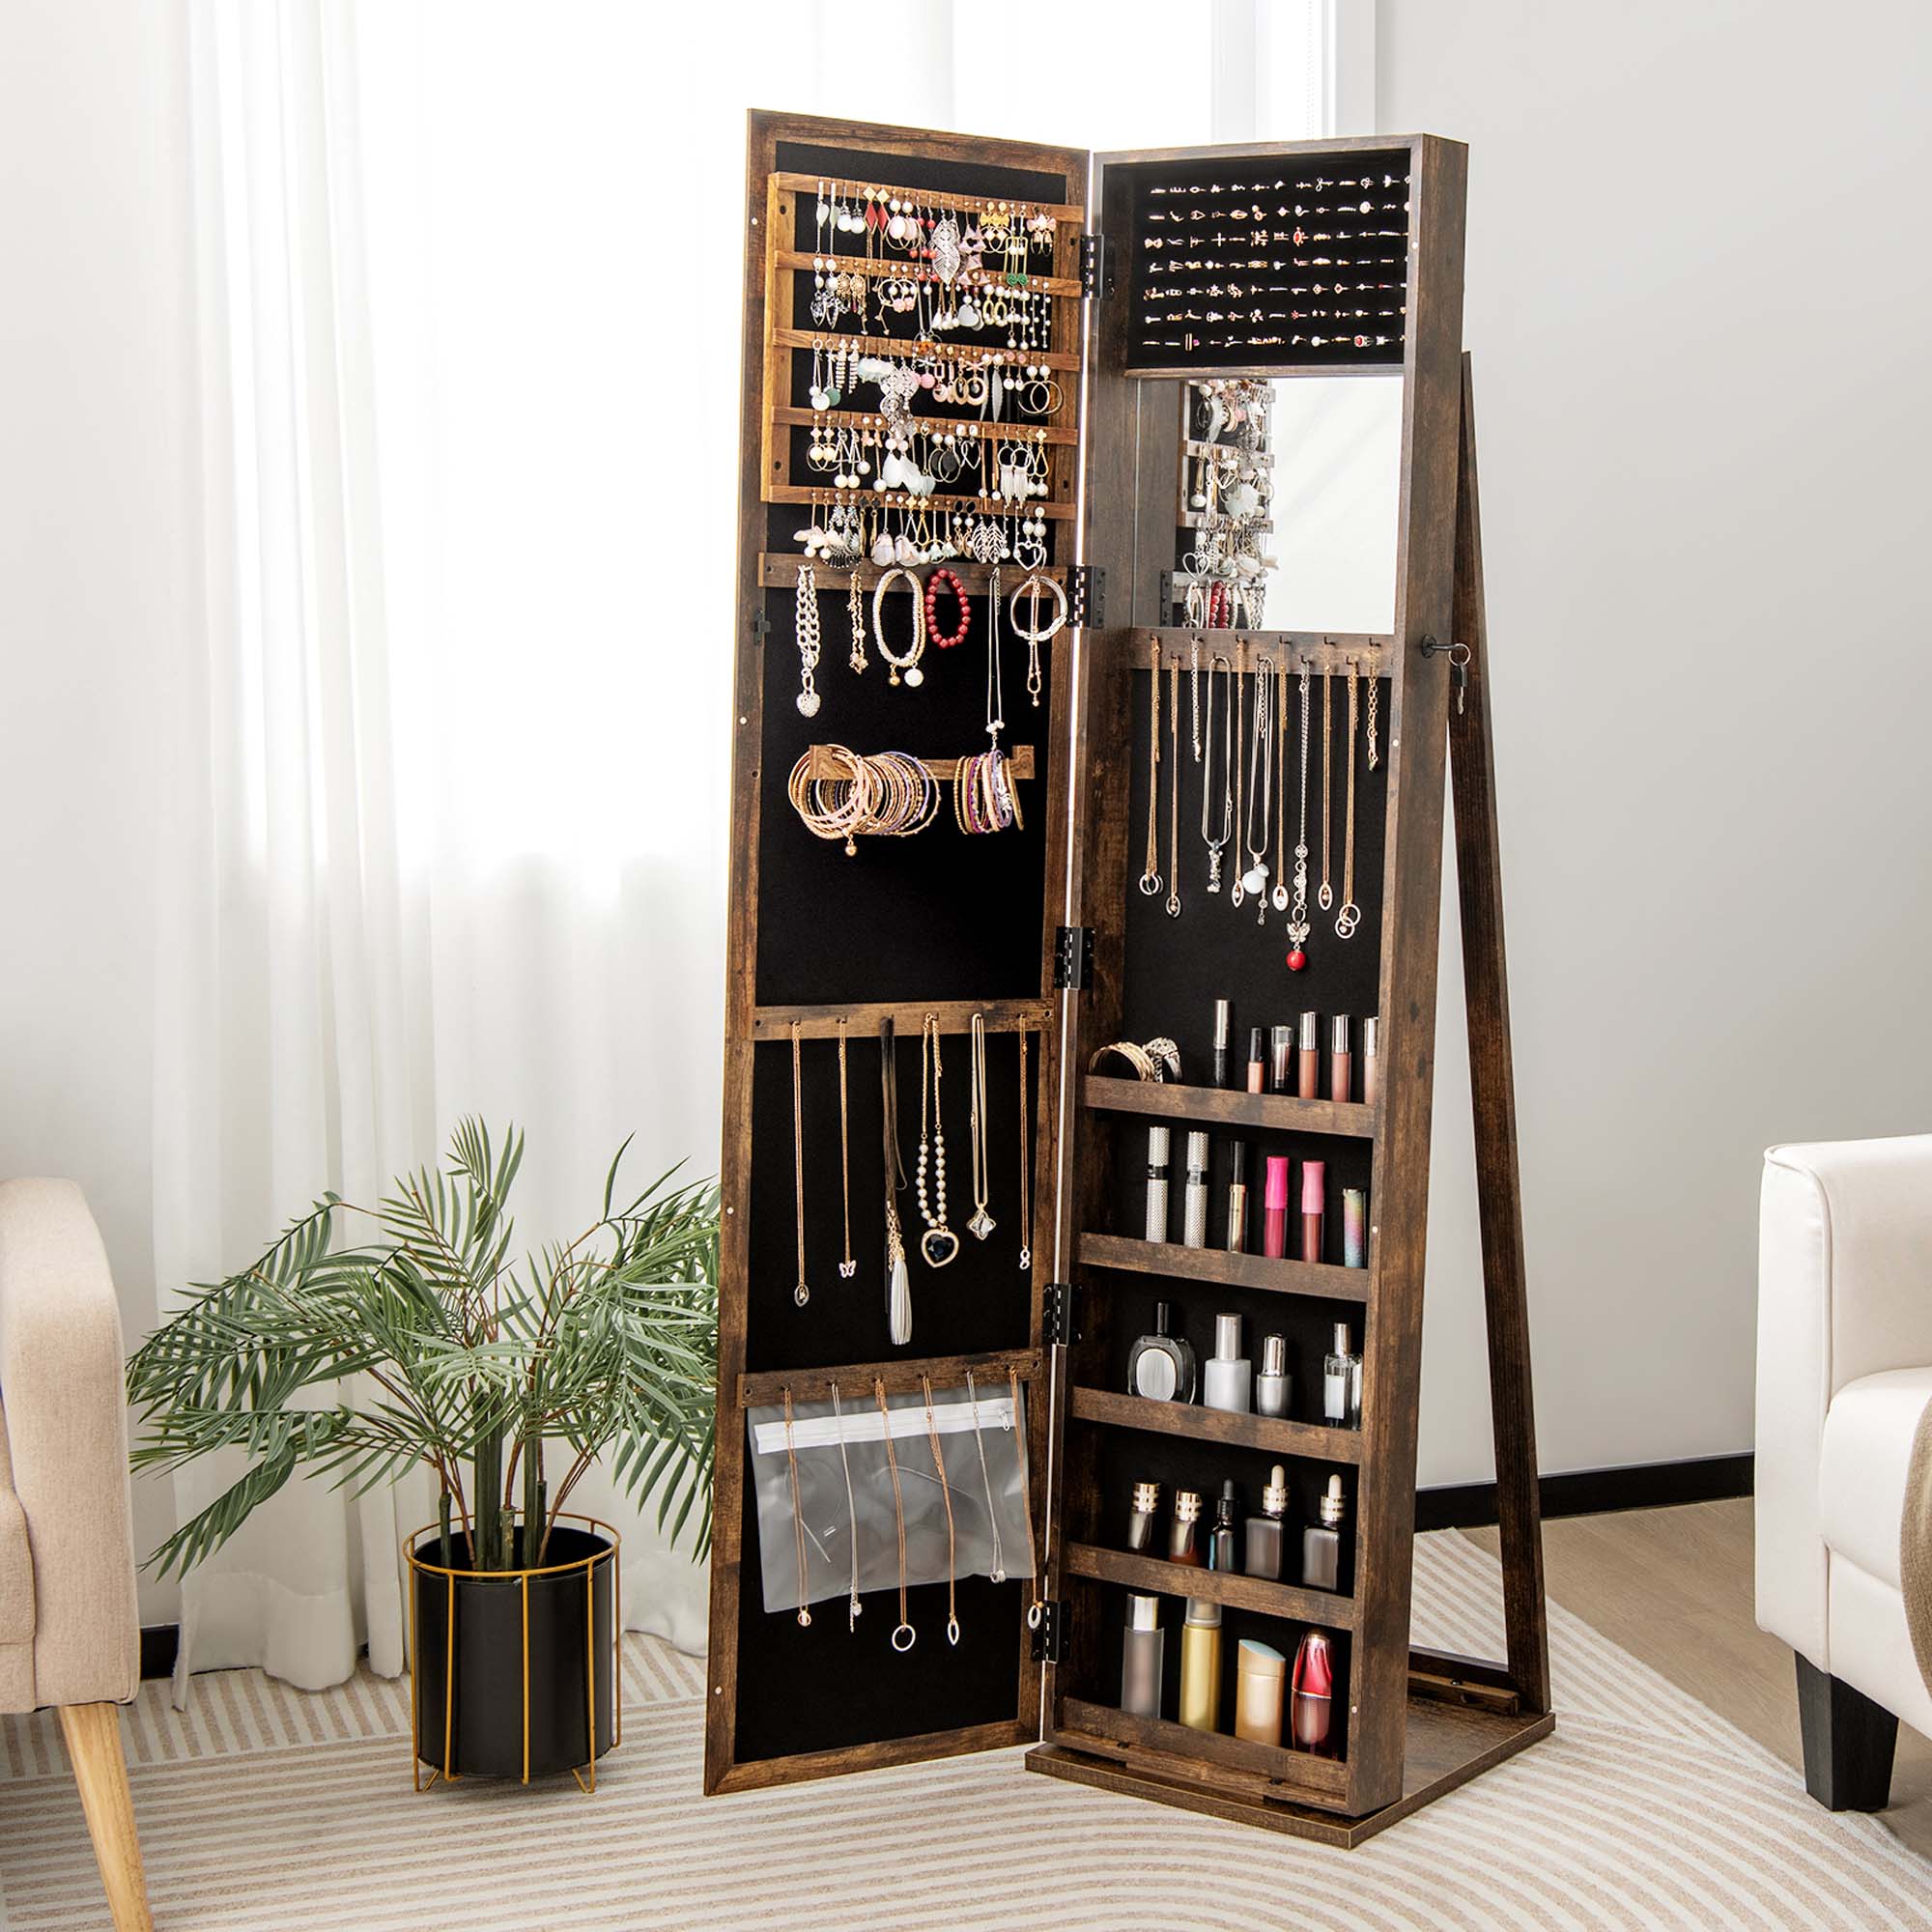 Costway Mirrored Jewelry Cabinet Armoire Lockable Standing Storage Organizer with Shelf